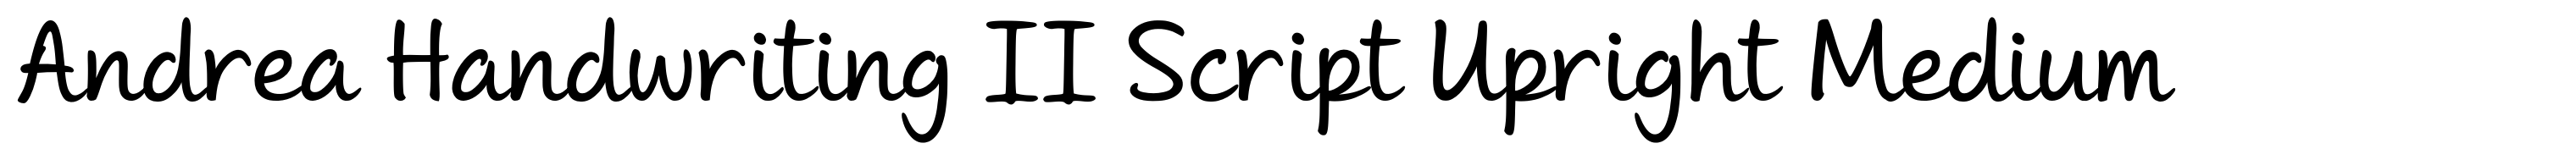 Andrea Handwriting II Script Upright Medium